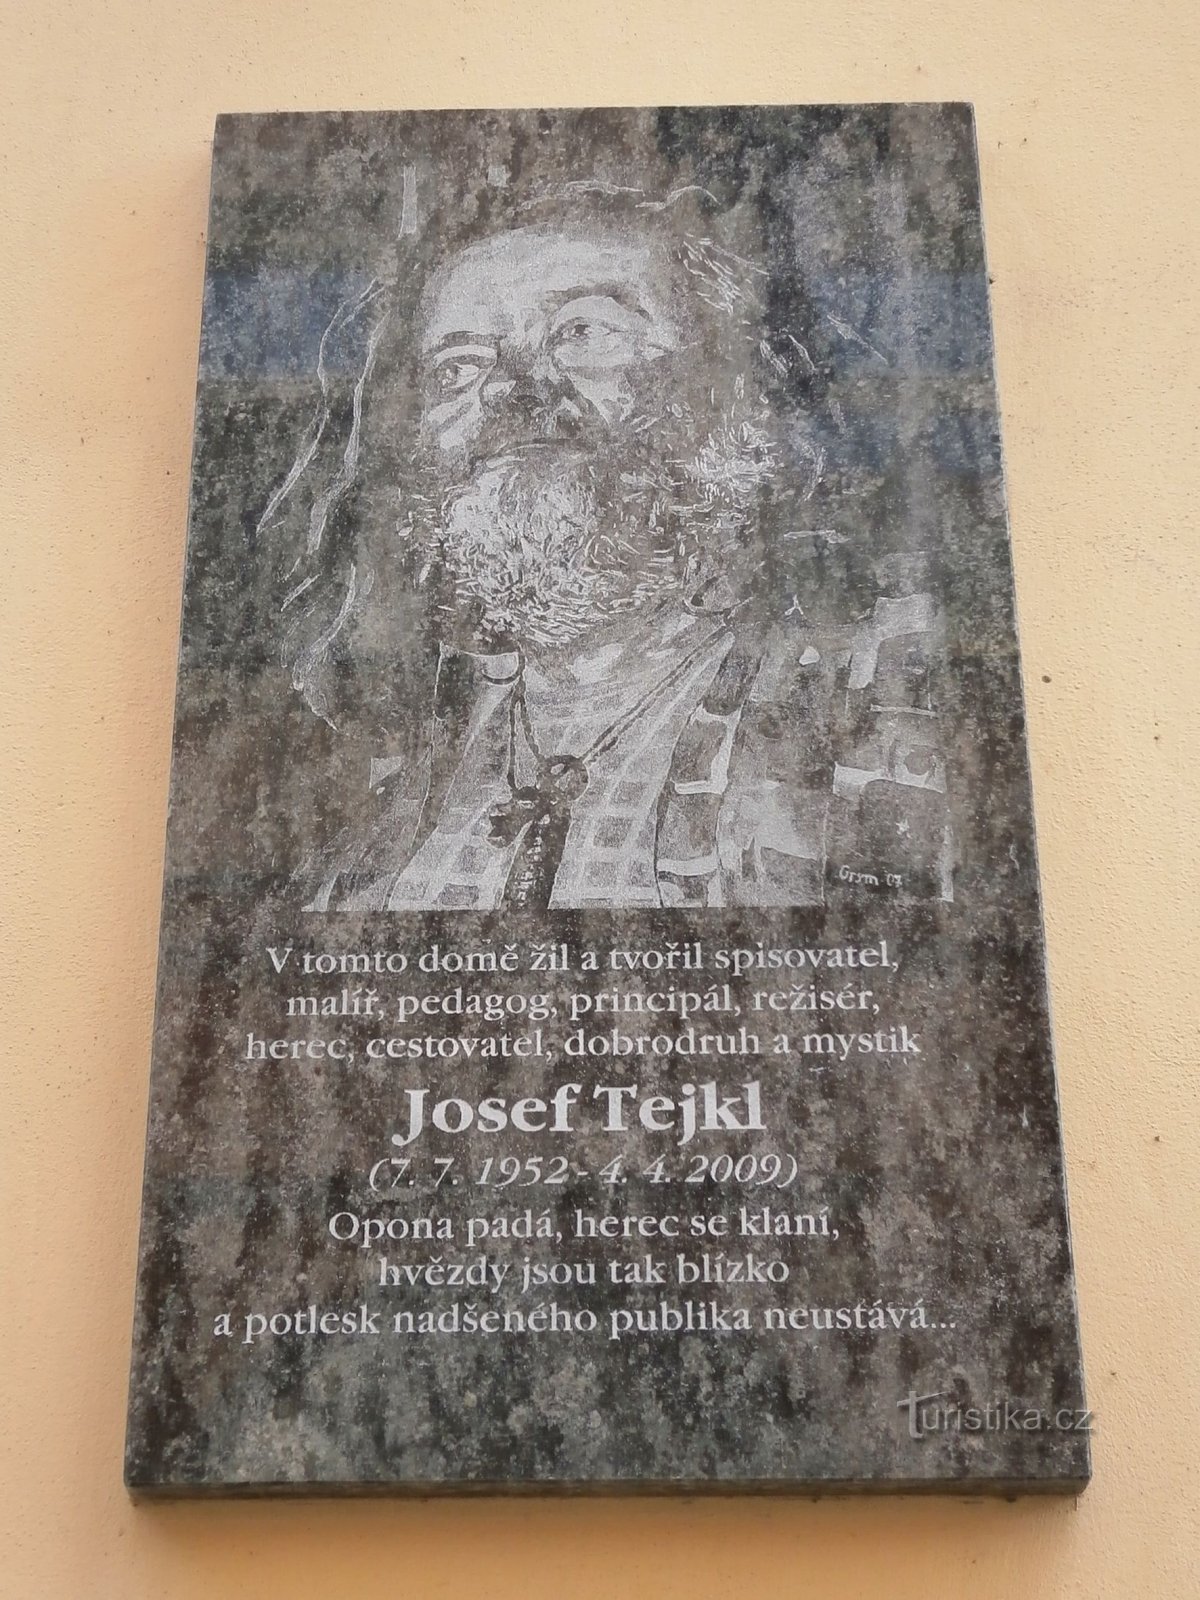 Мемориальная доска Йозефу Тейклу (Градец Кралове, 15.7.2013)